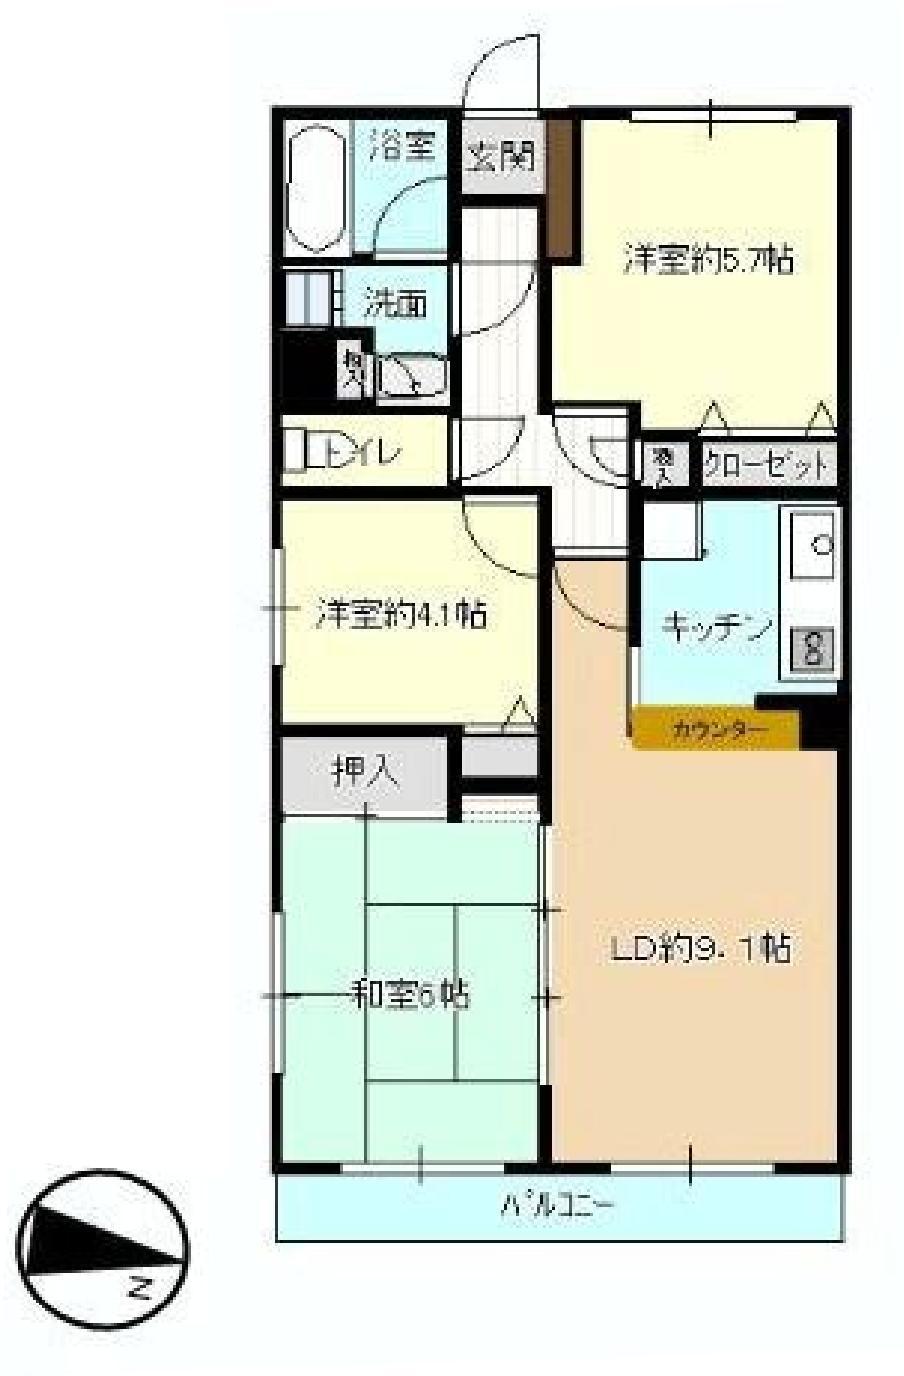 Floor plan. 3LDK, Price 8.5 million yen, Occupied area 63.58 sq m , Balcony area 7.71 sq m